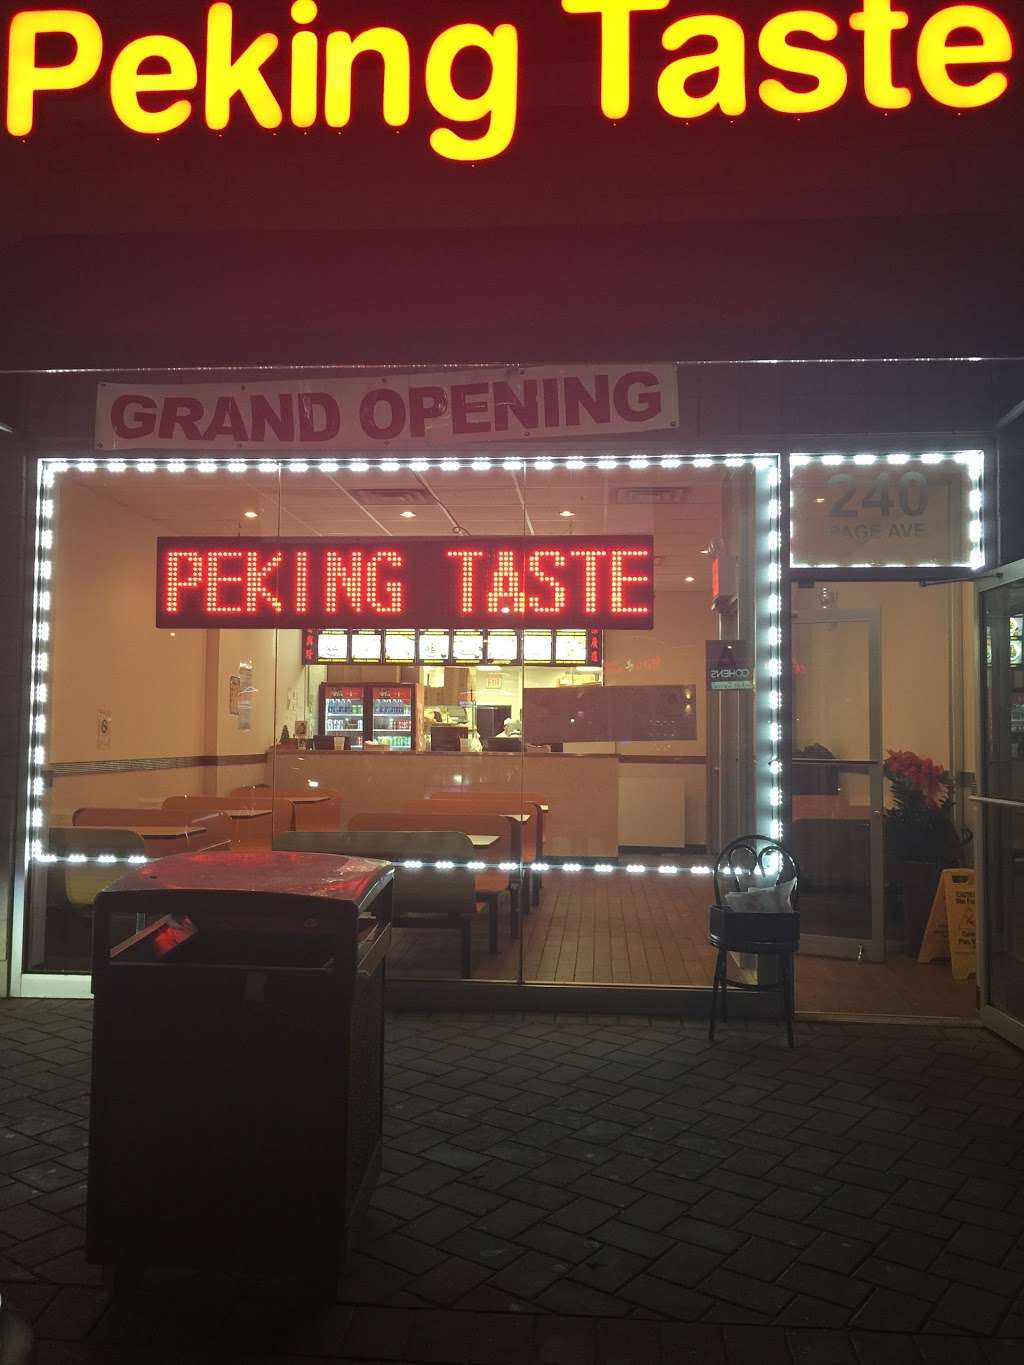 Peking taste chines | 260 Page Ave, Staten Island, NY 10307 | Phone: (718) 966-1900